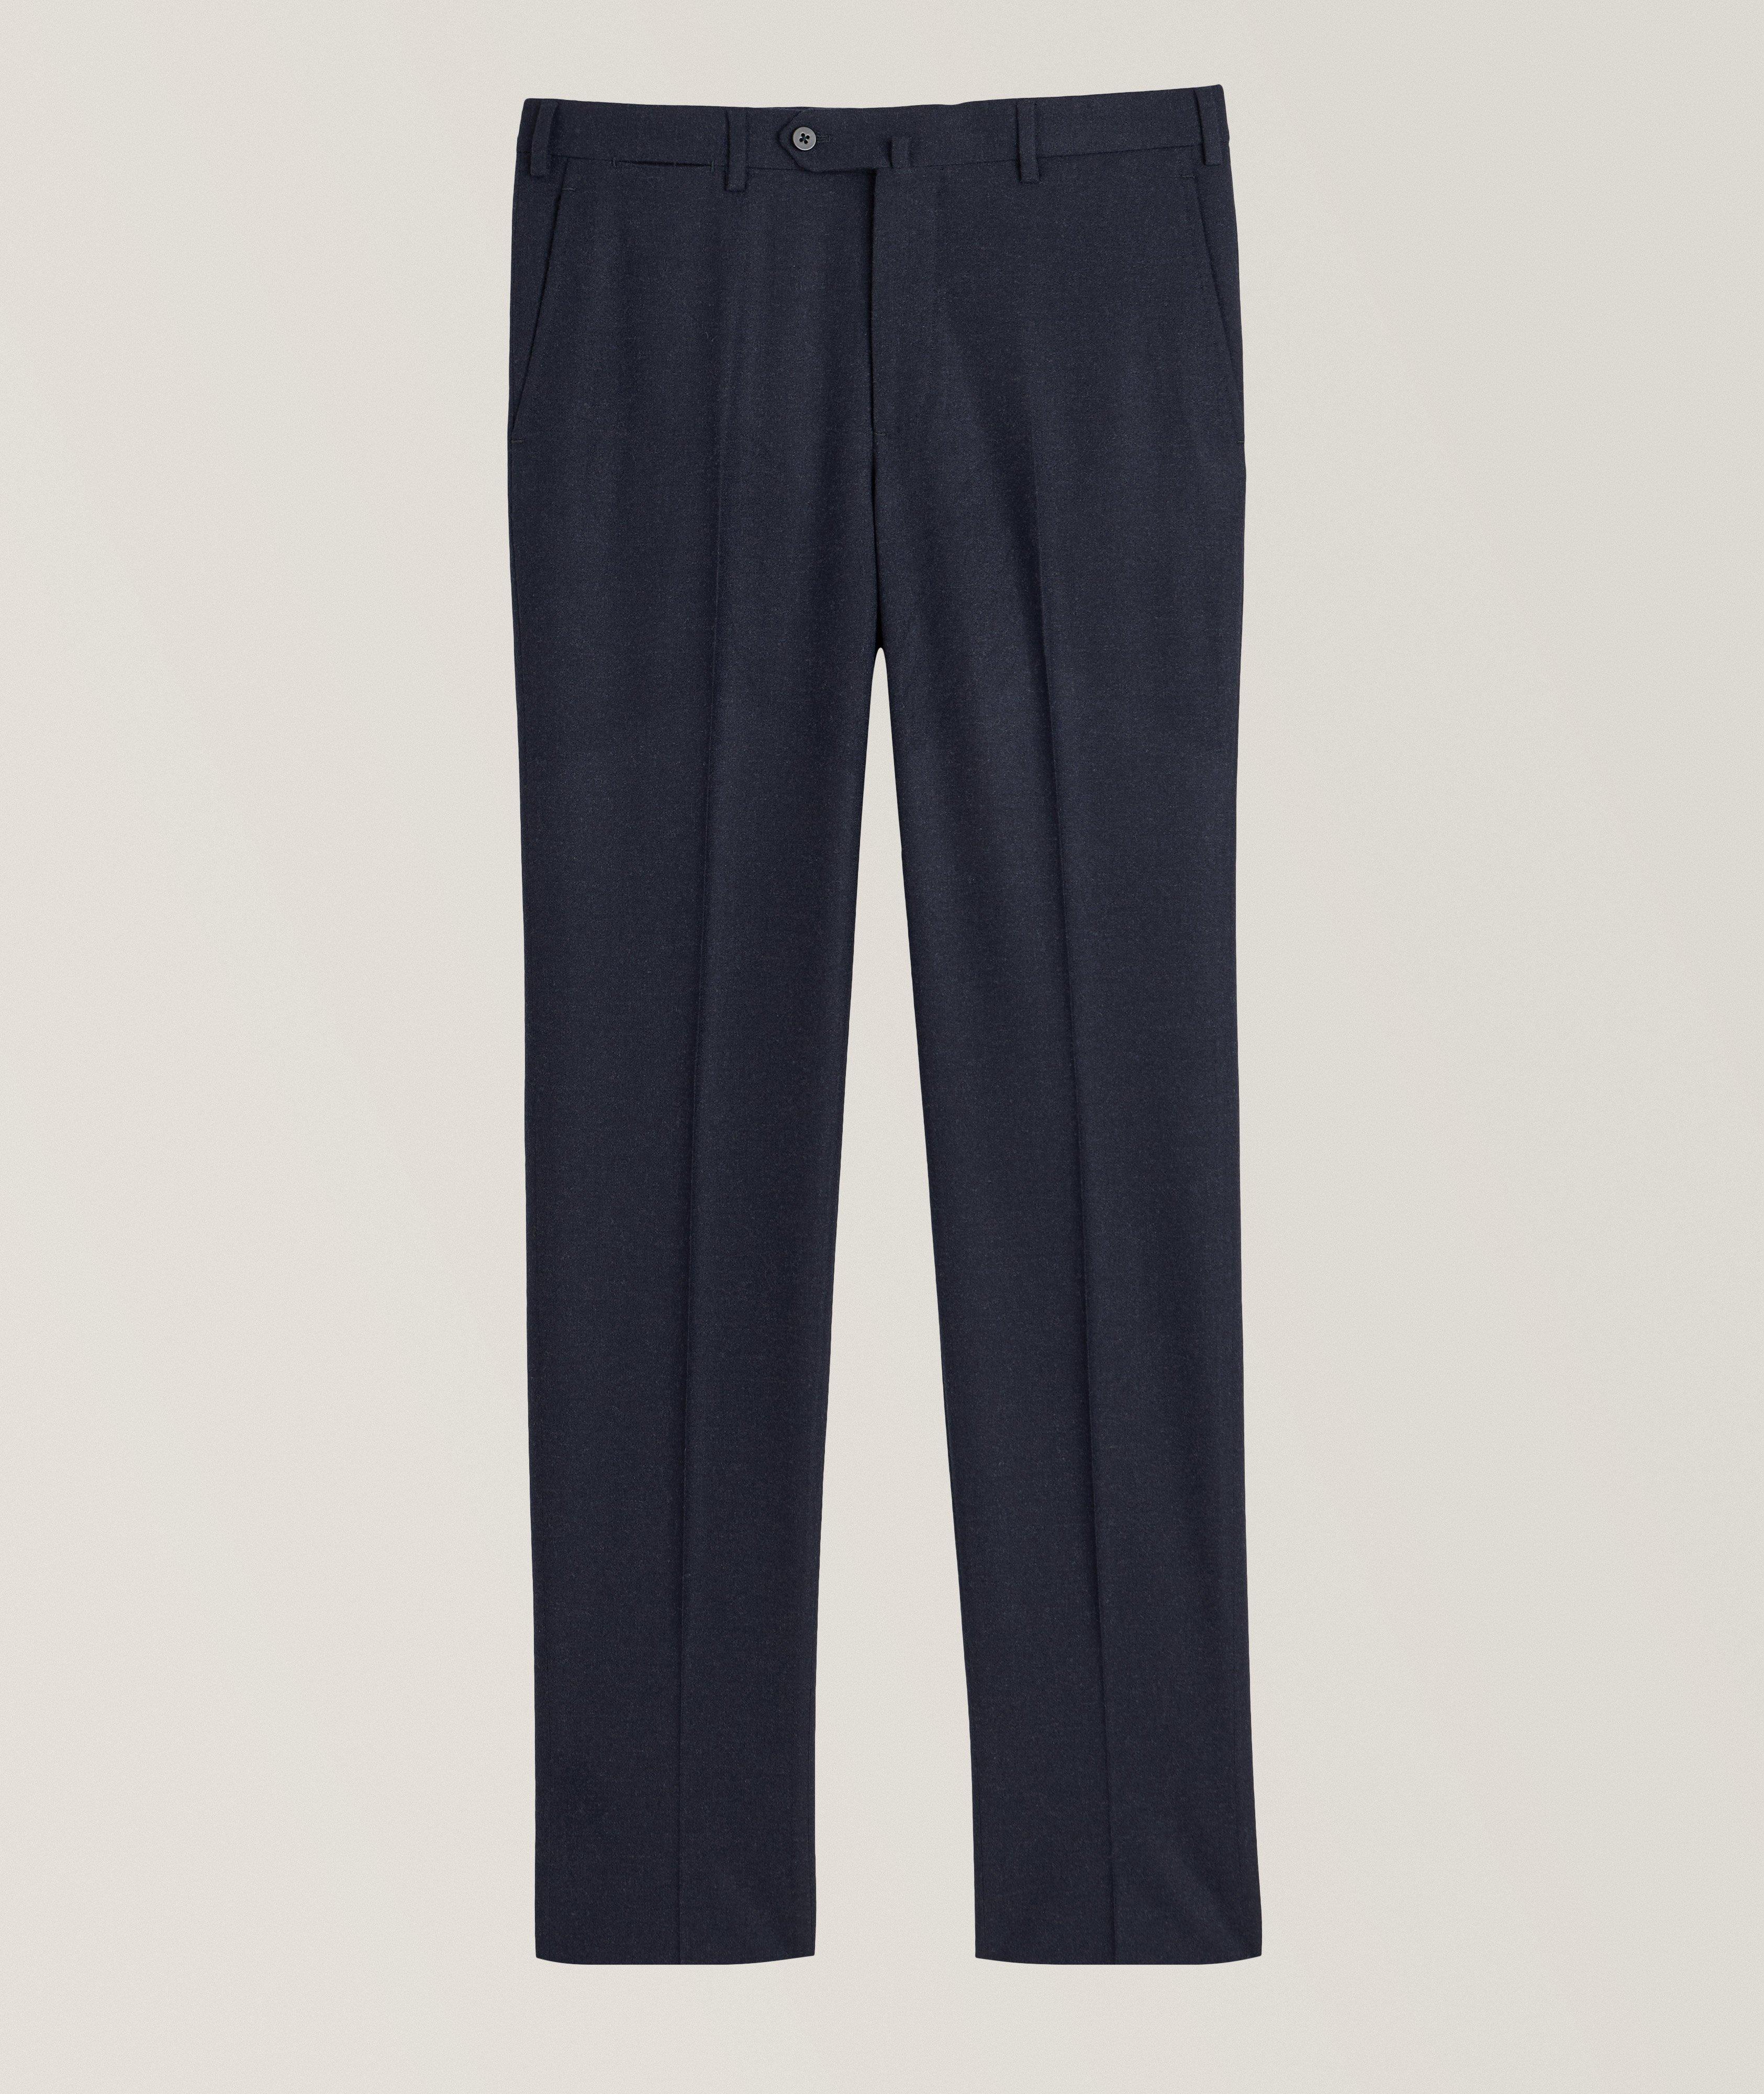 Flannel Wool-Blend Pants image 0